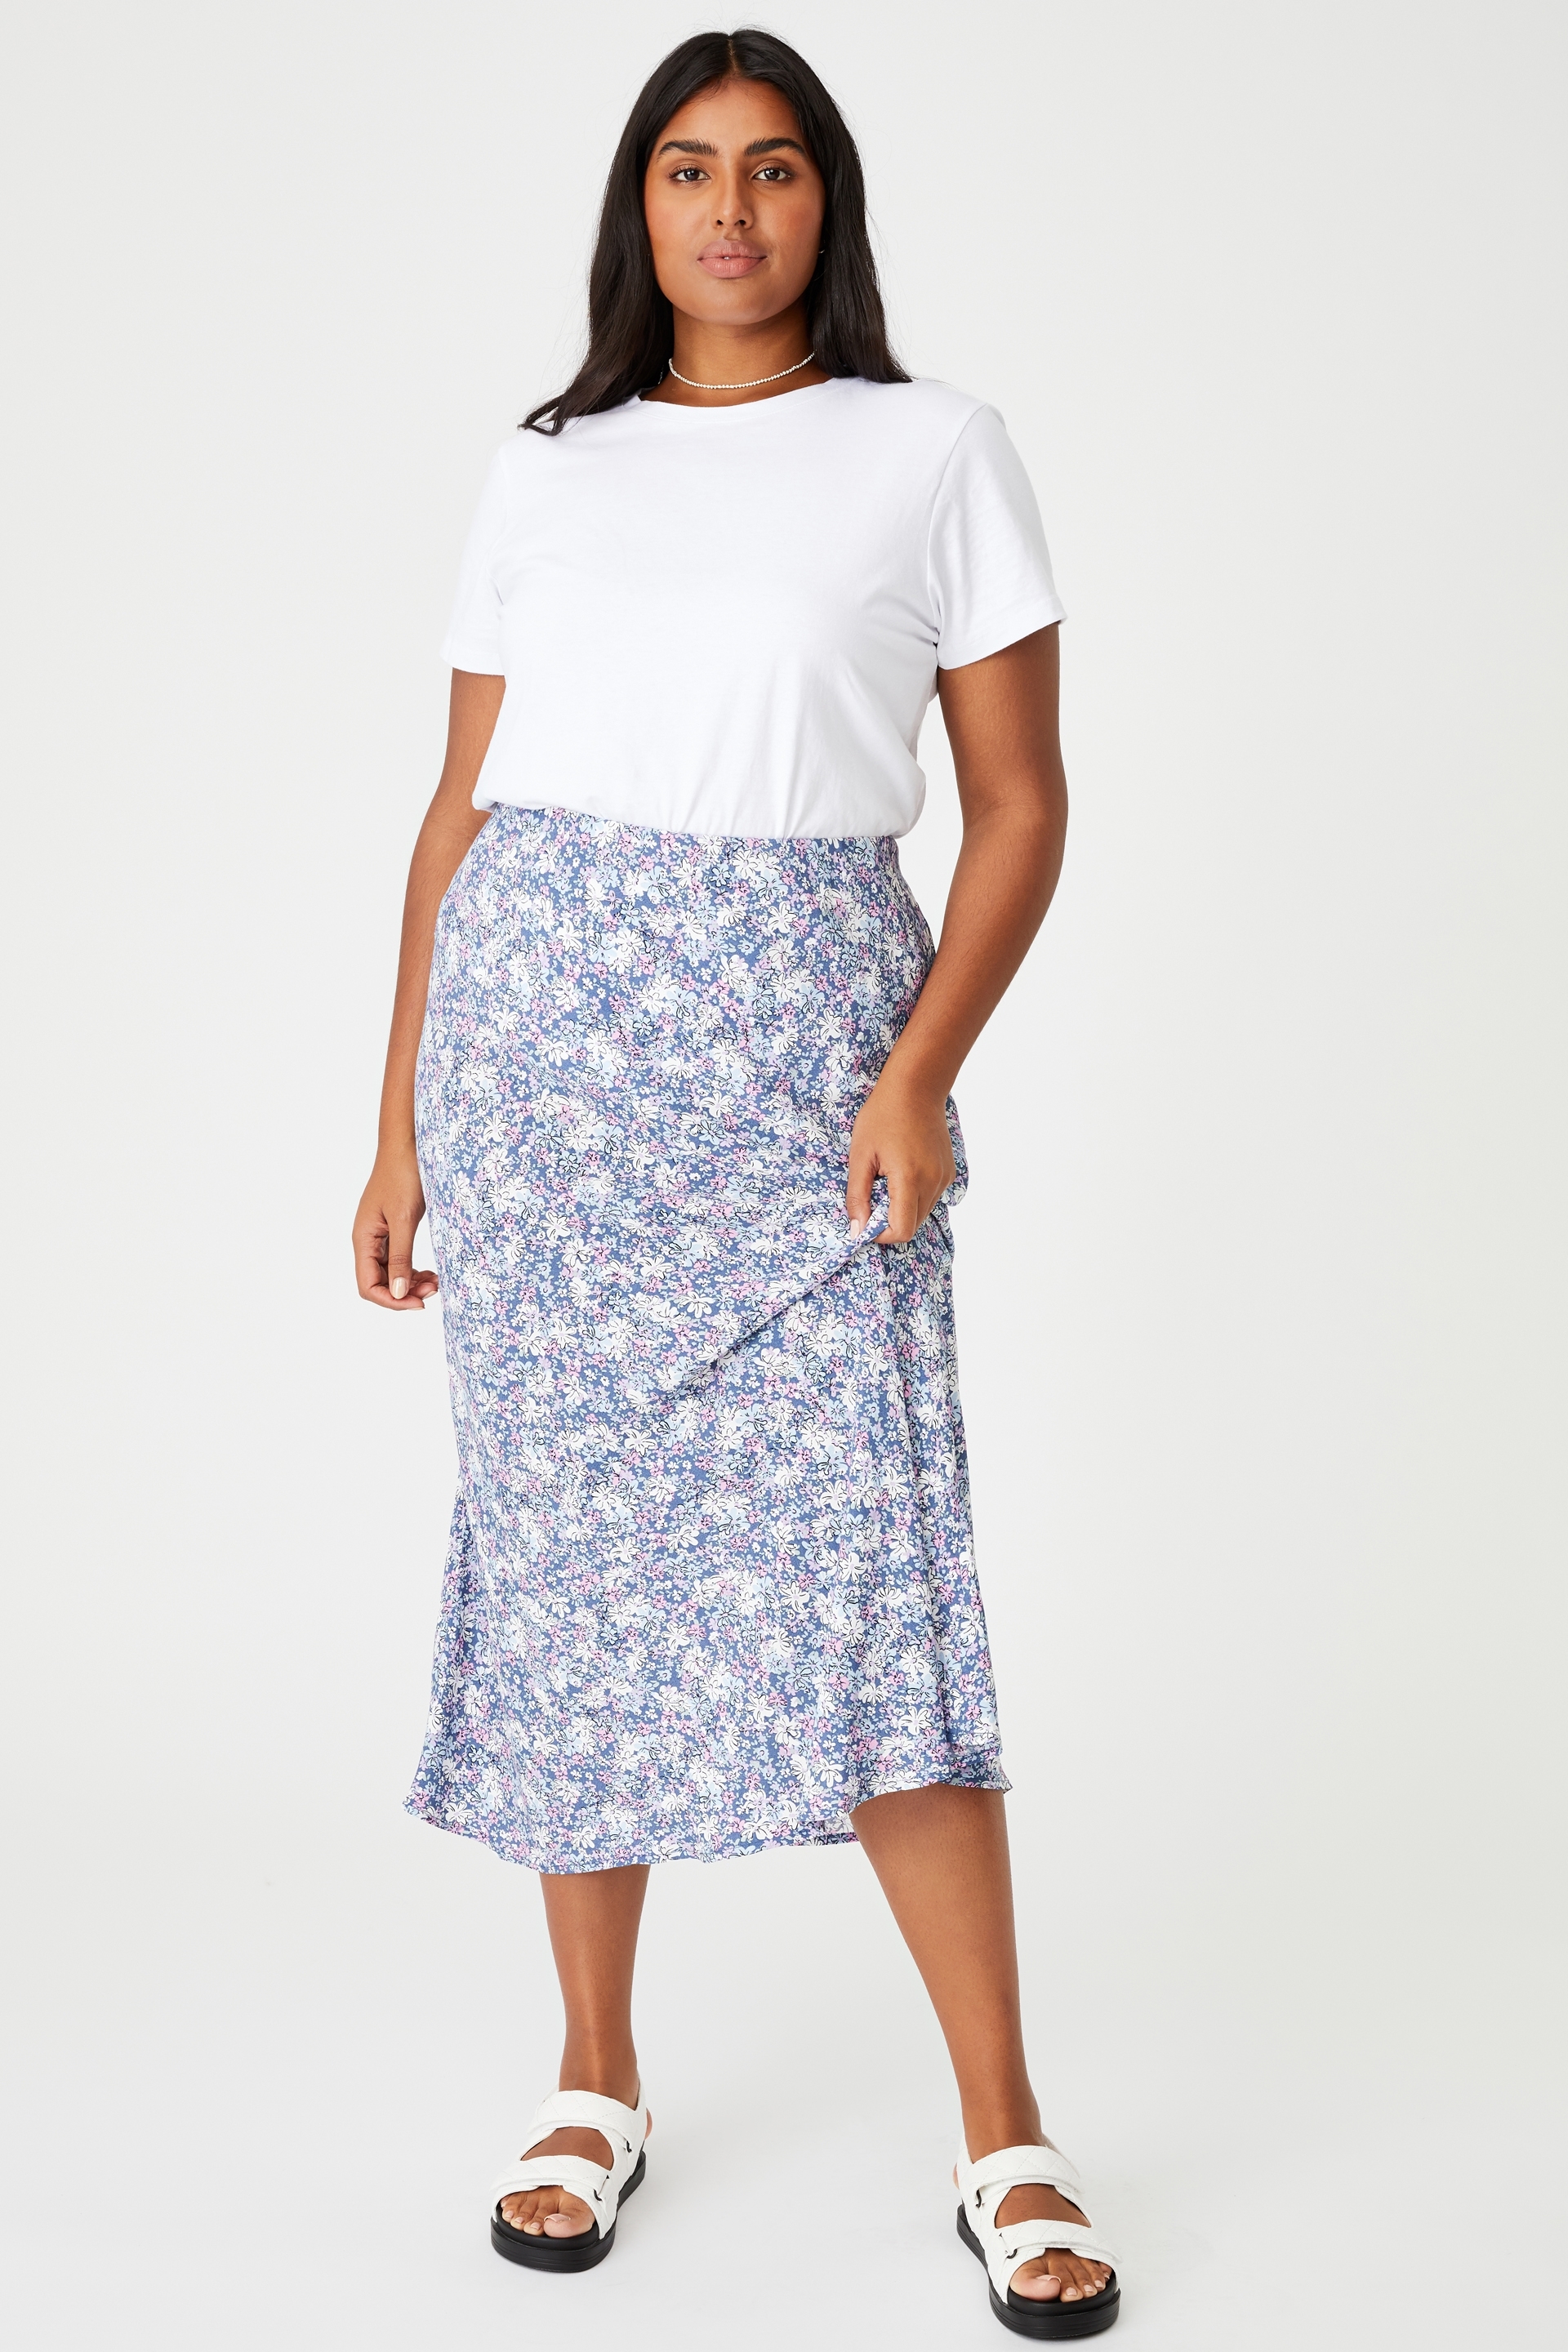 Cotton On Women - Curve All Day Slip Skirt - Diane floral coastal blue